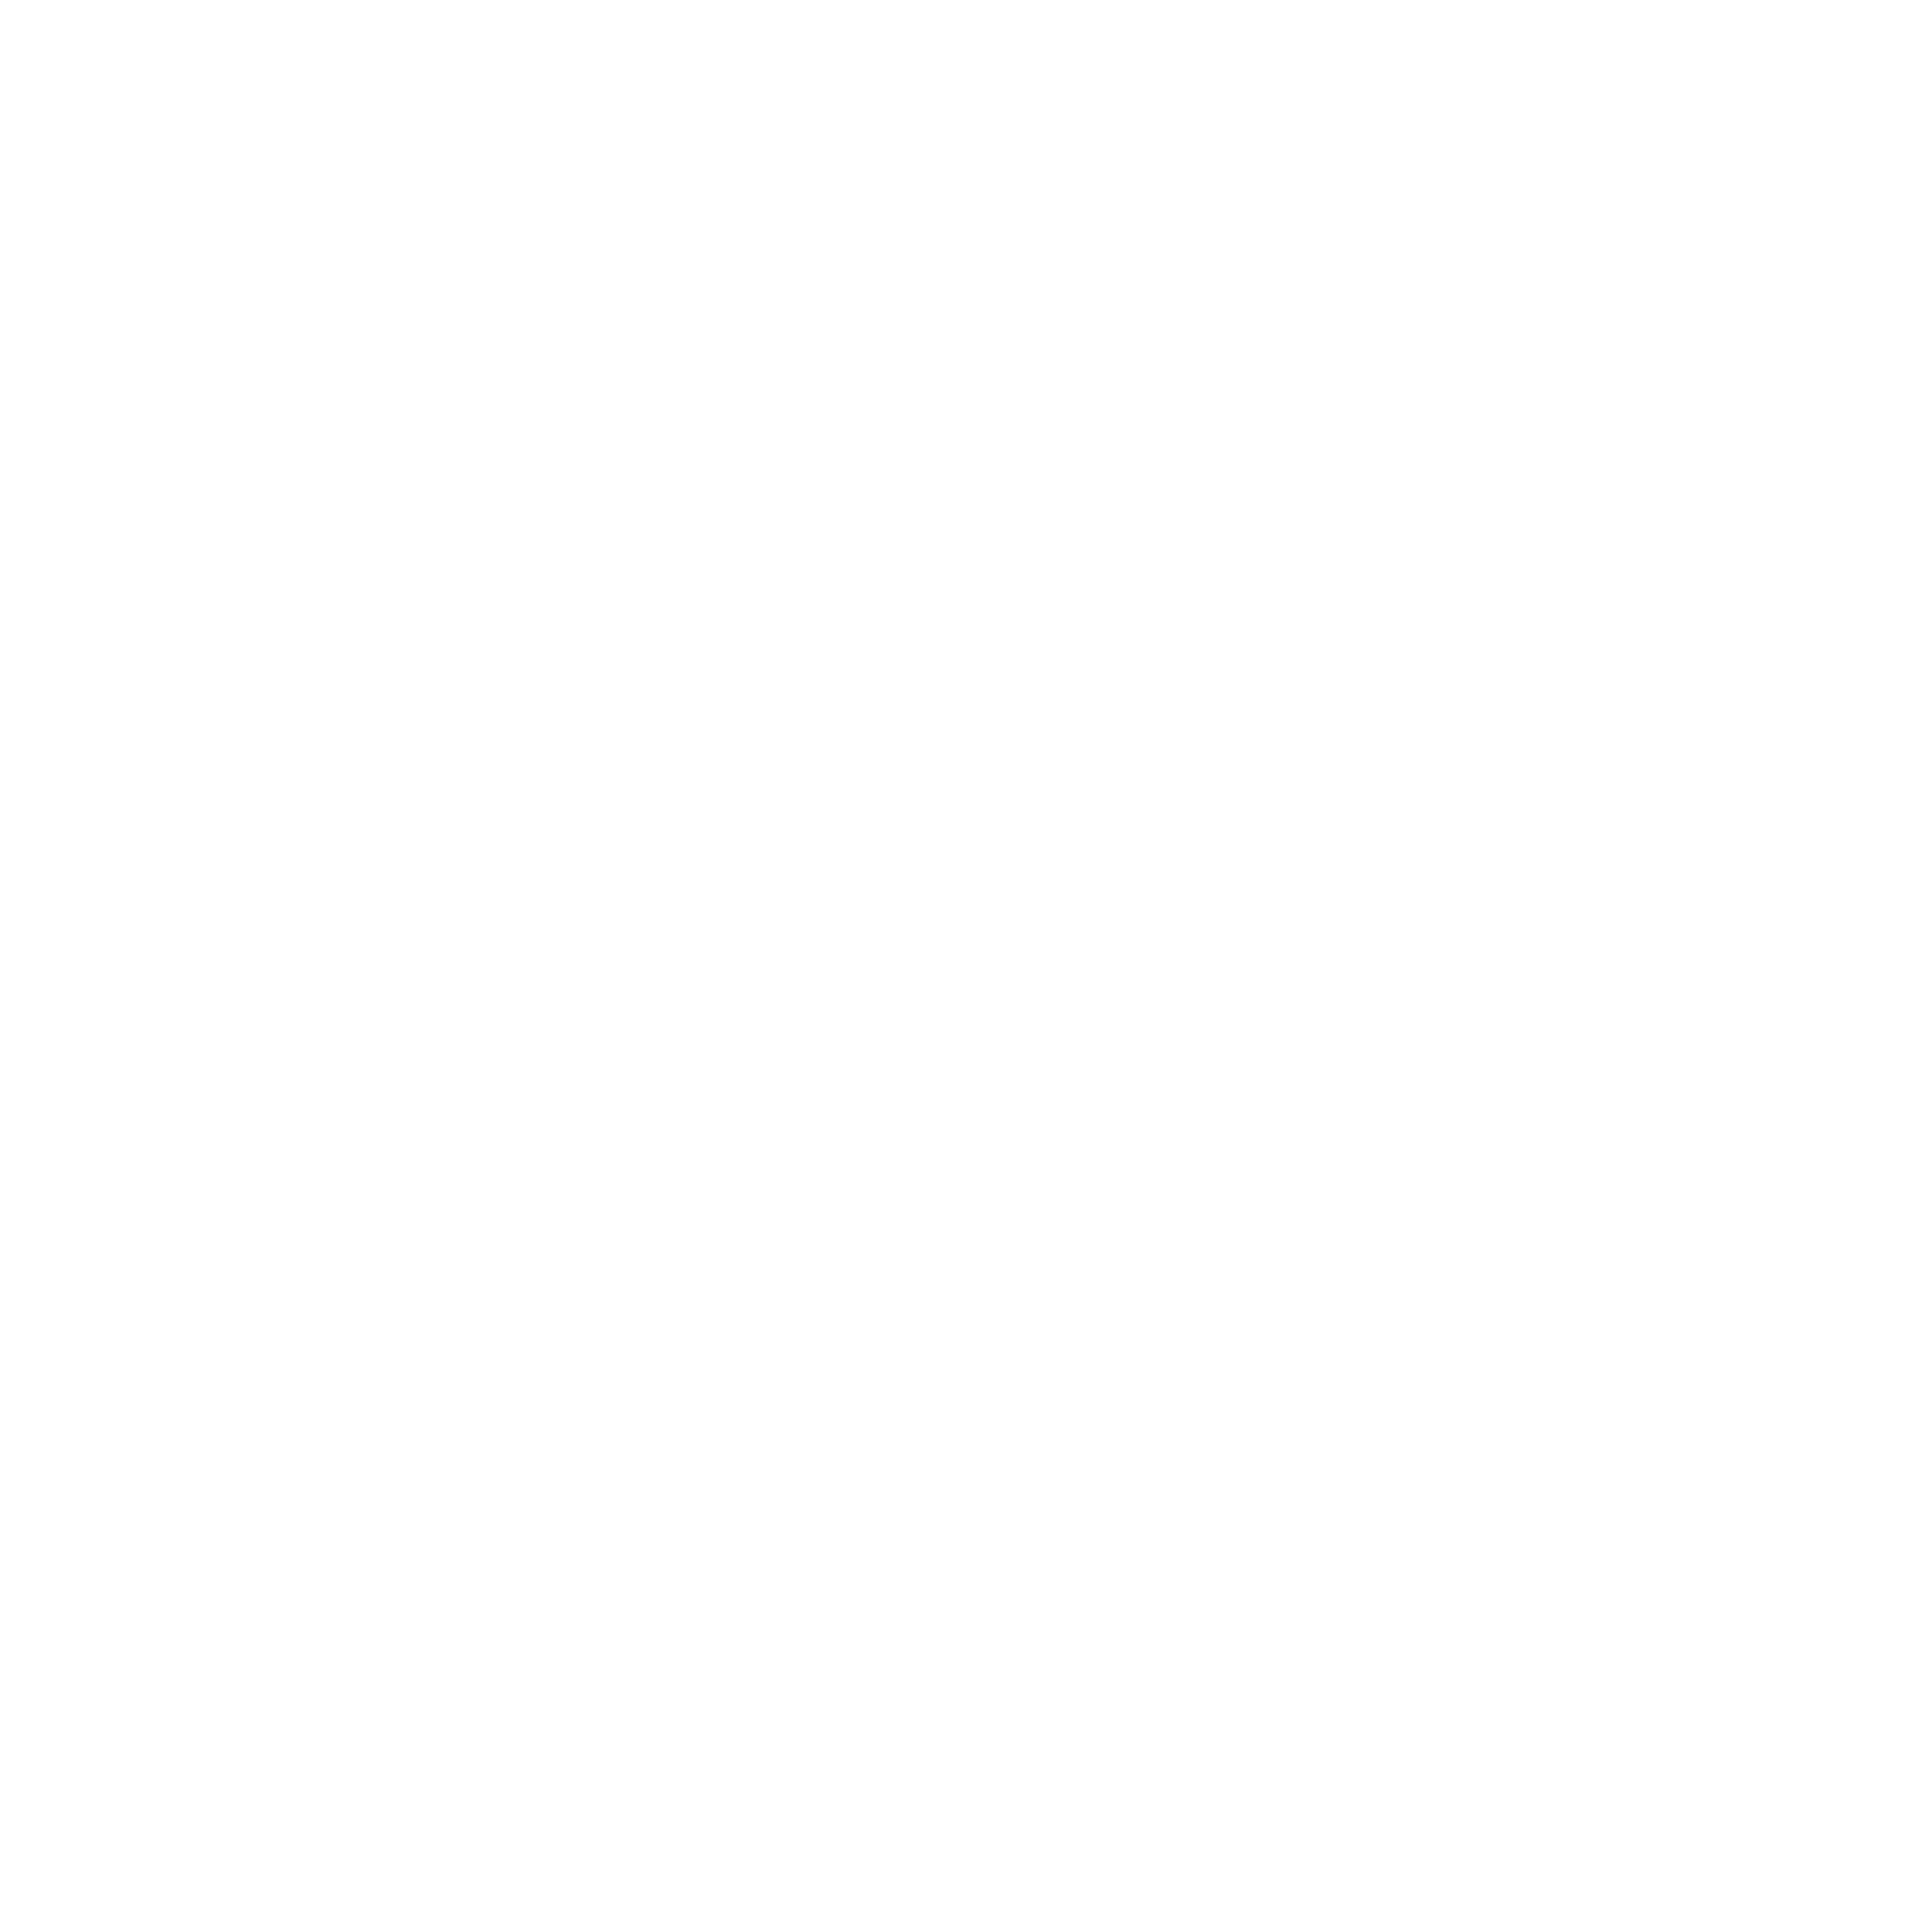 Greenwave logo - white